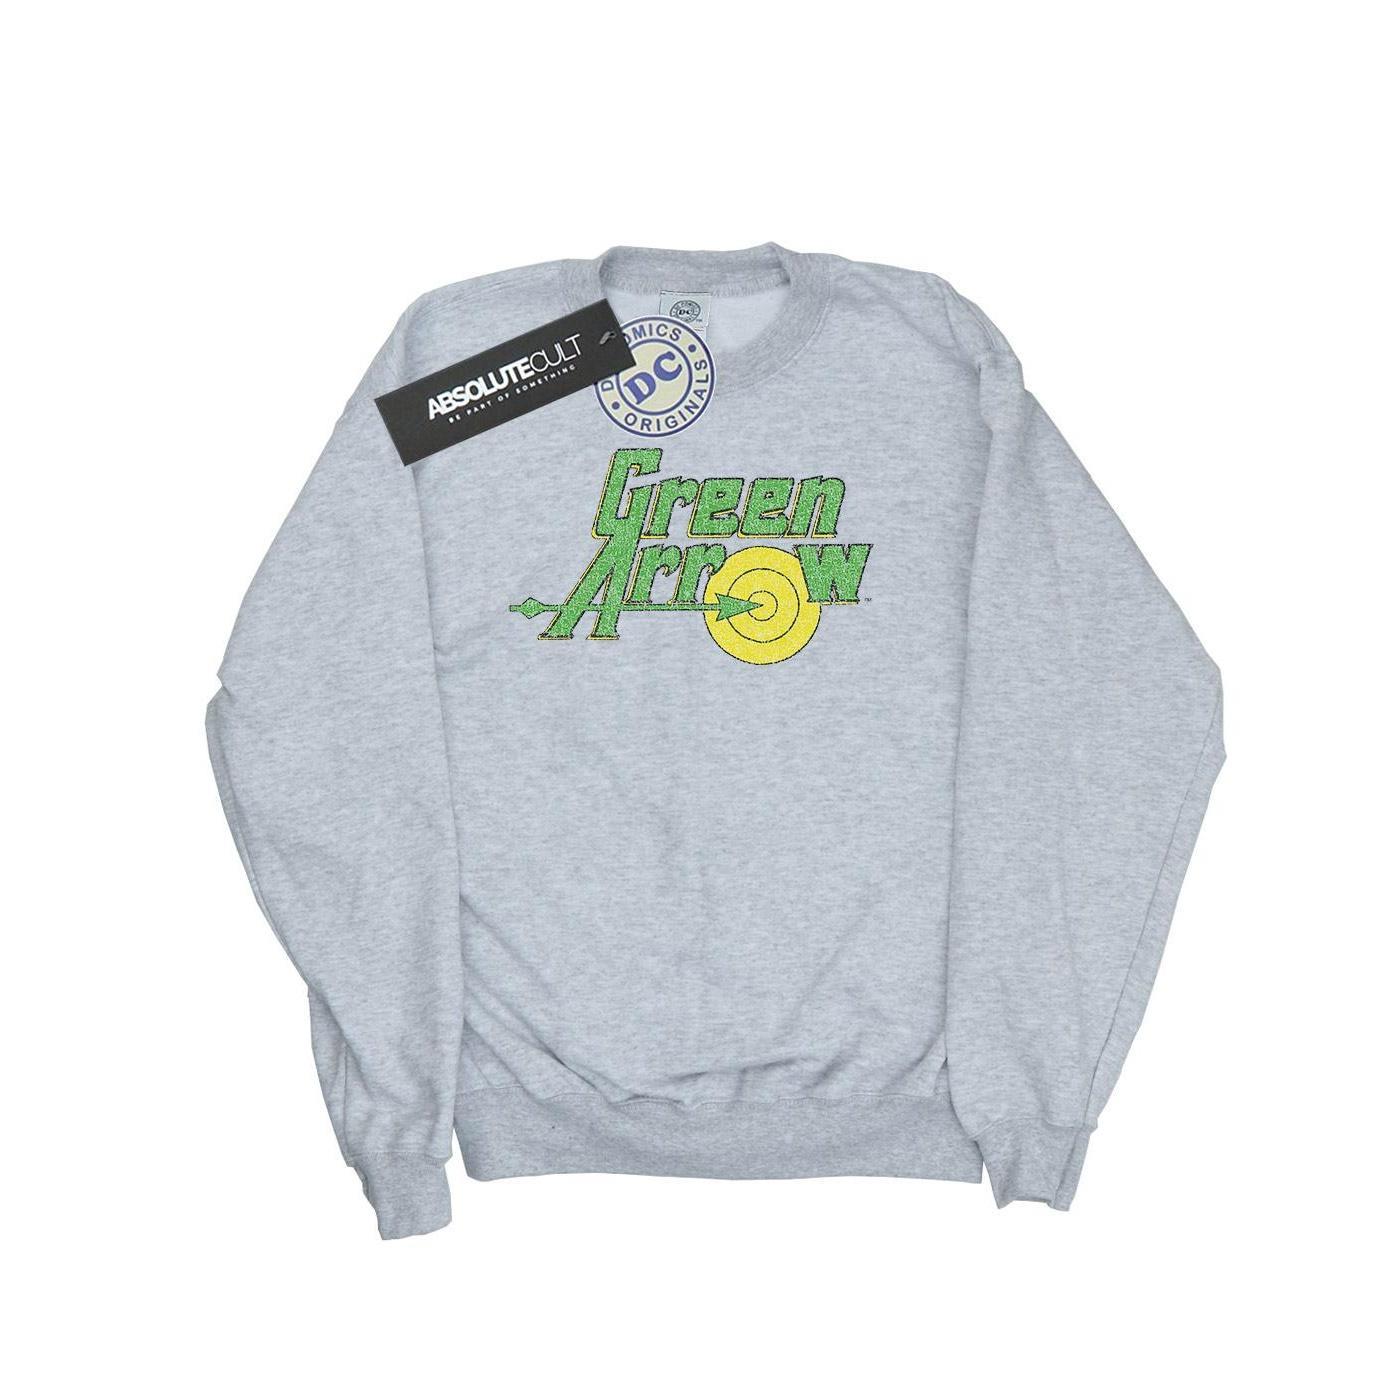 DC Comics Boys Green Arrow Crackle Logo Sweatshirt (Sports Grey) (5-6 Years)